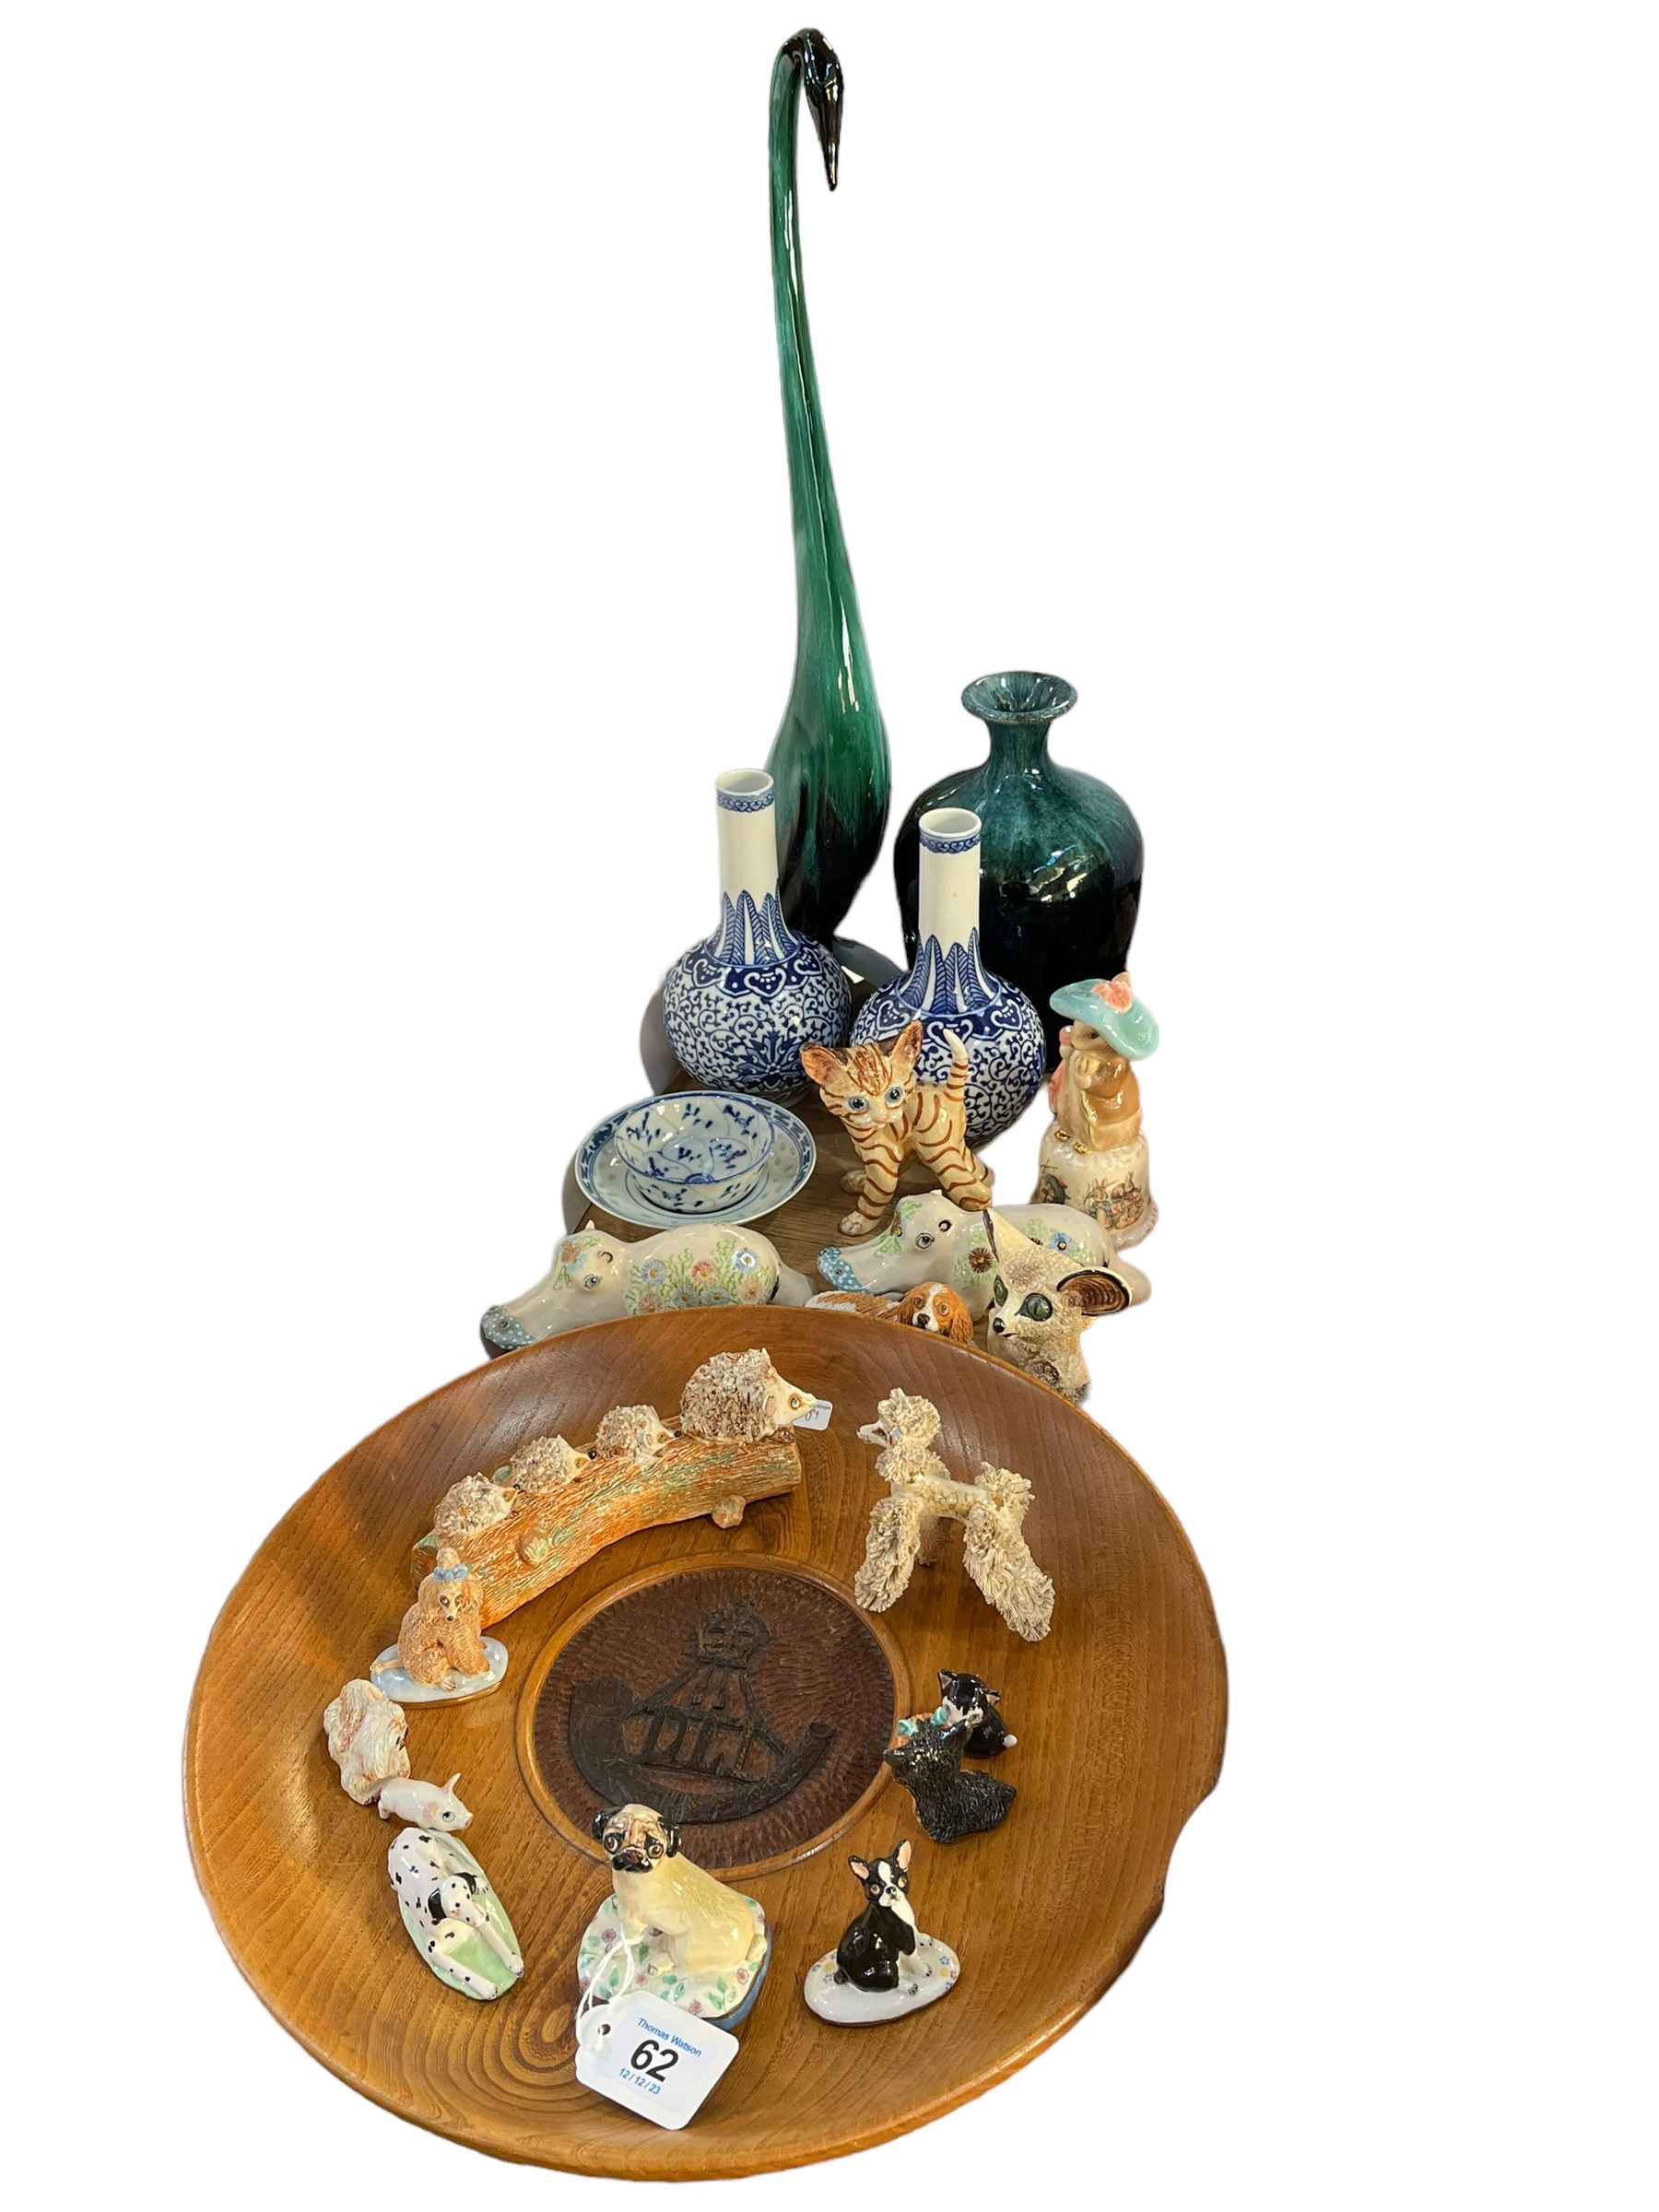 Basil Matthews figurines, Oriental blue and white, pin badges, DLI commemorative bowl, etc.